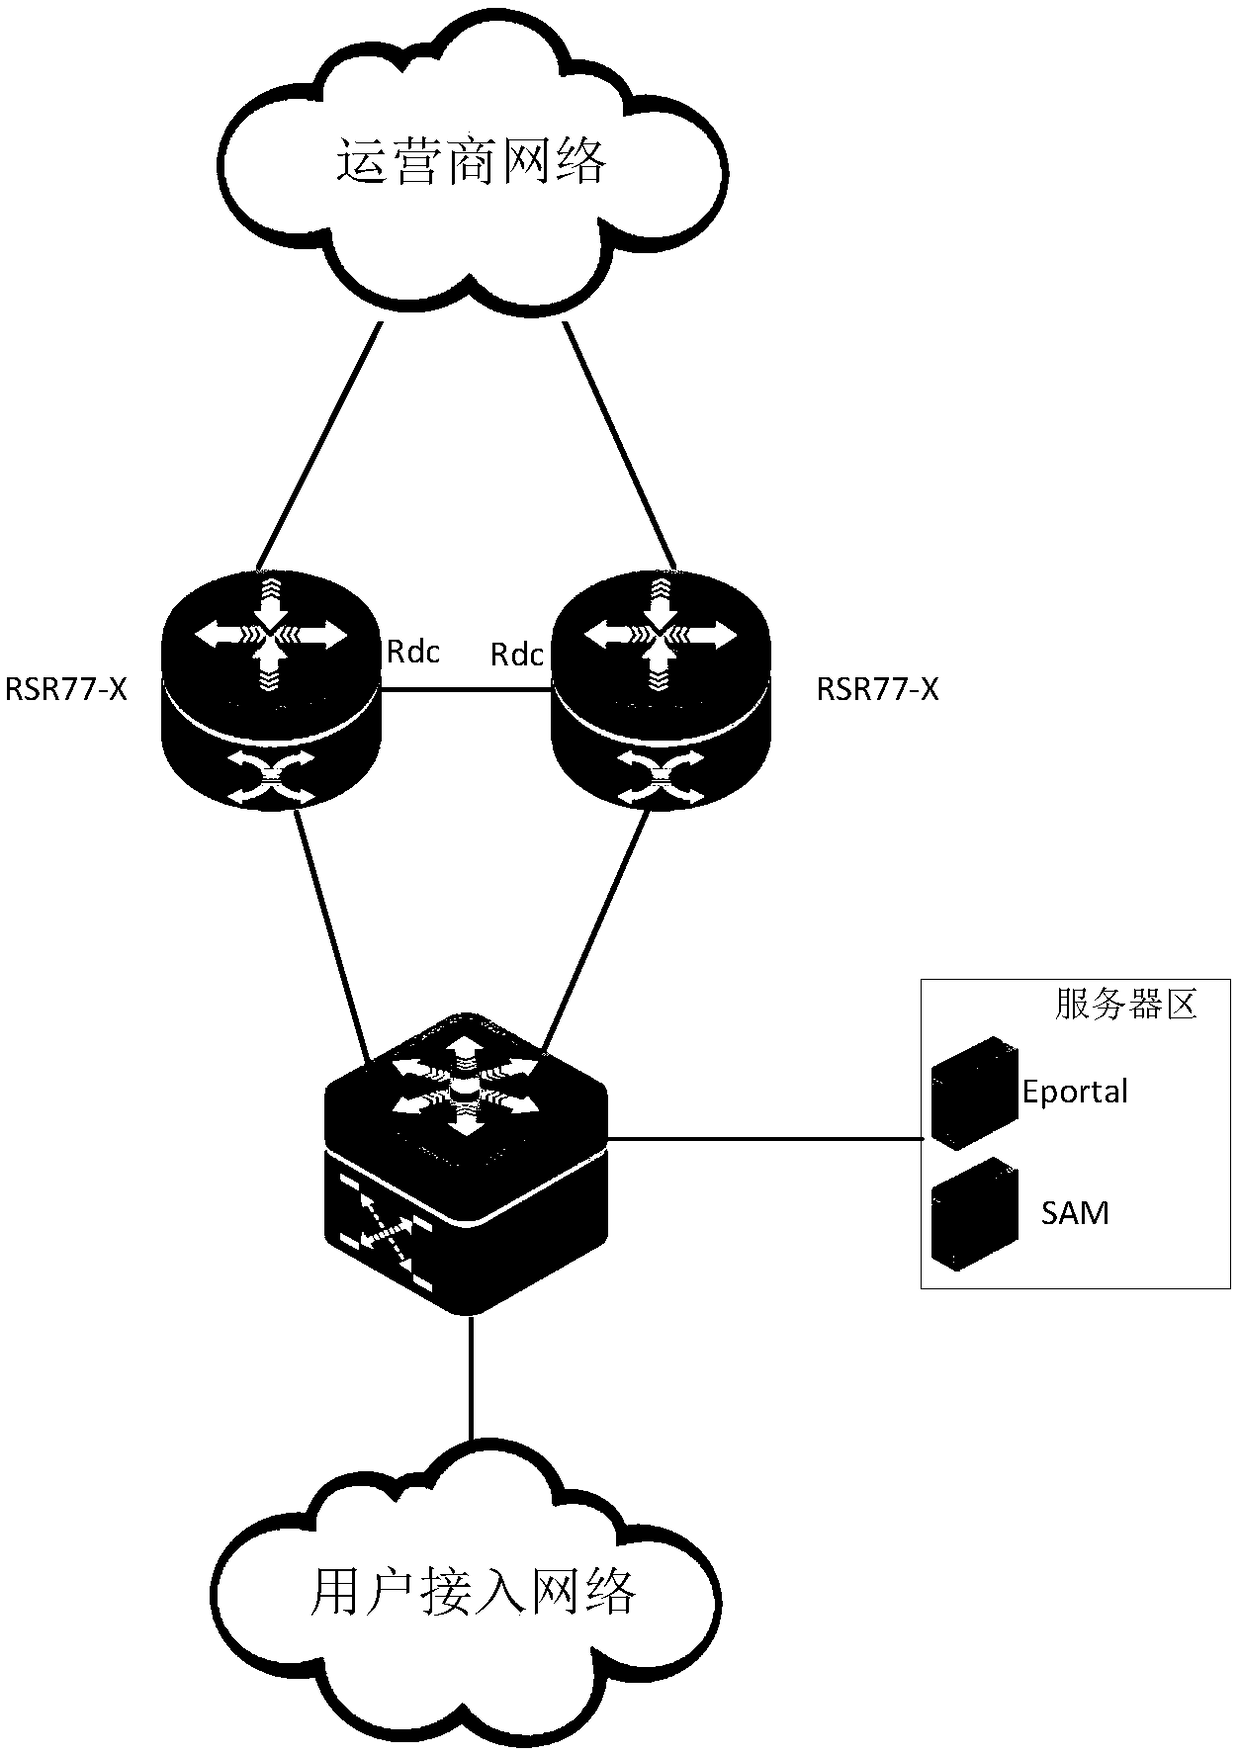 Cross-device link aggregation method, apparatus, computing device and storage medium